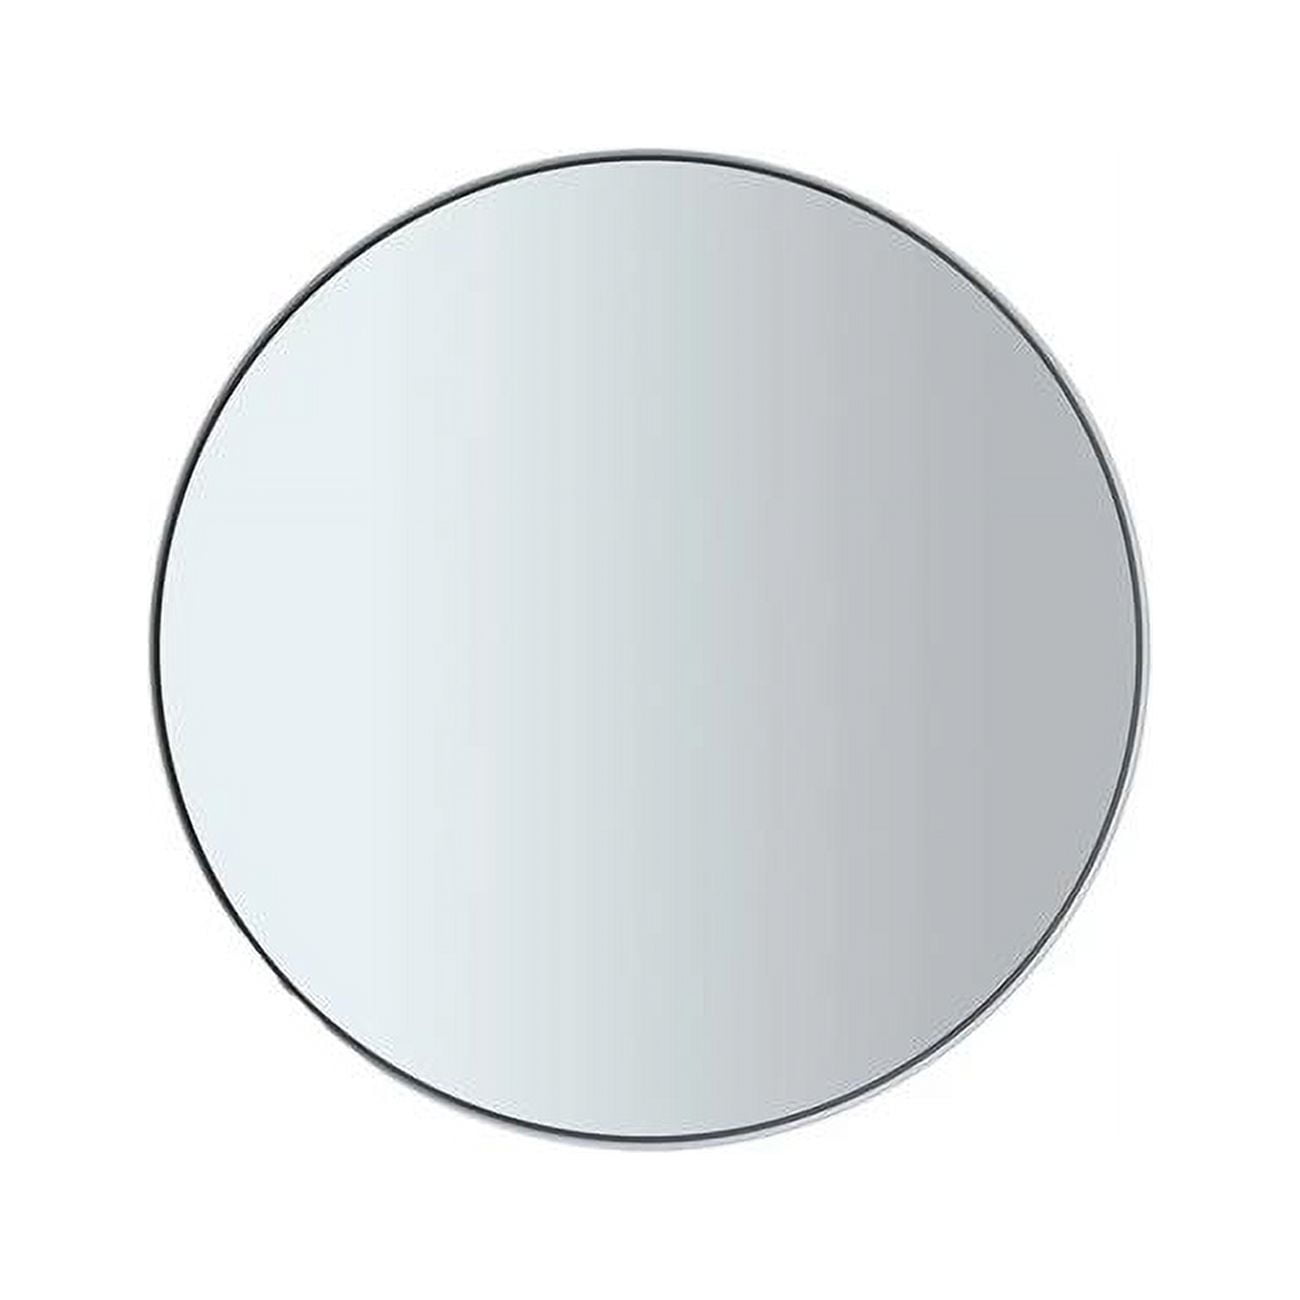 Picture of Blomus 66163 31 in. Rim Round Accent Mirror - Smoke with White Rim